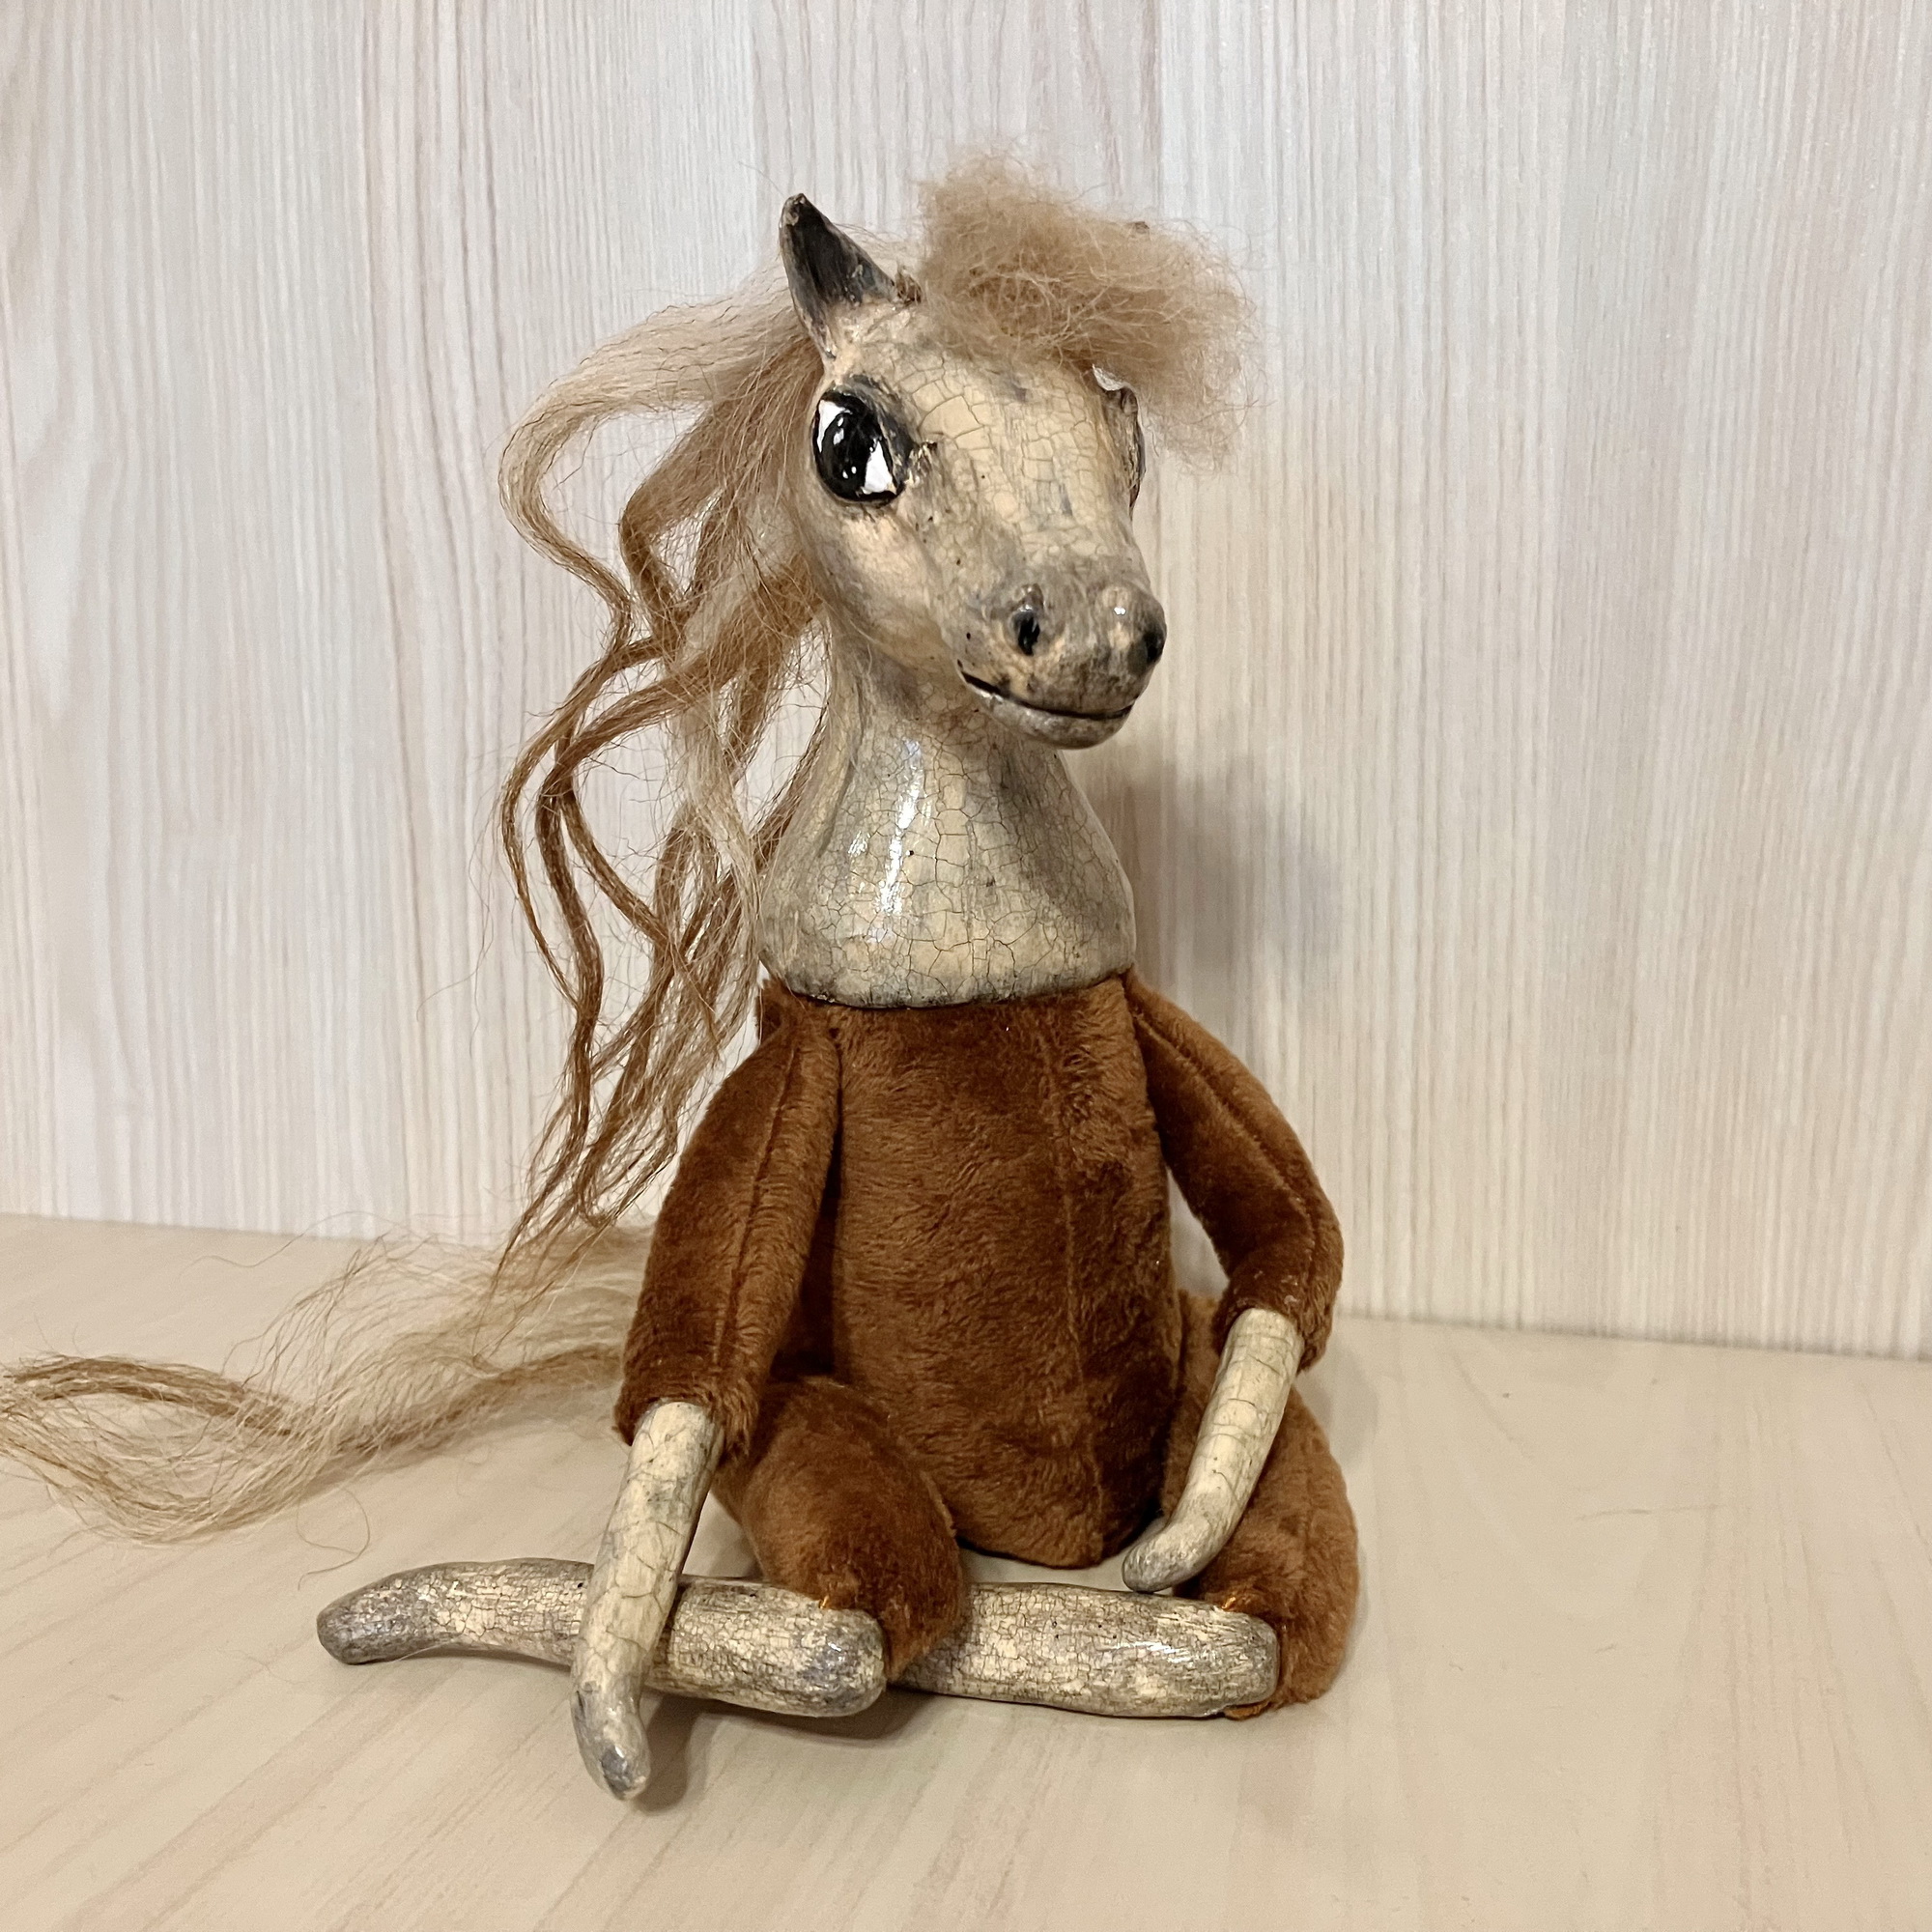 Poseable Art Doll Animal Horse Figurine – Ooak Boudoir Doll